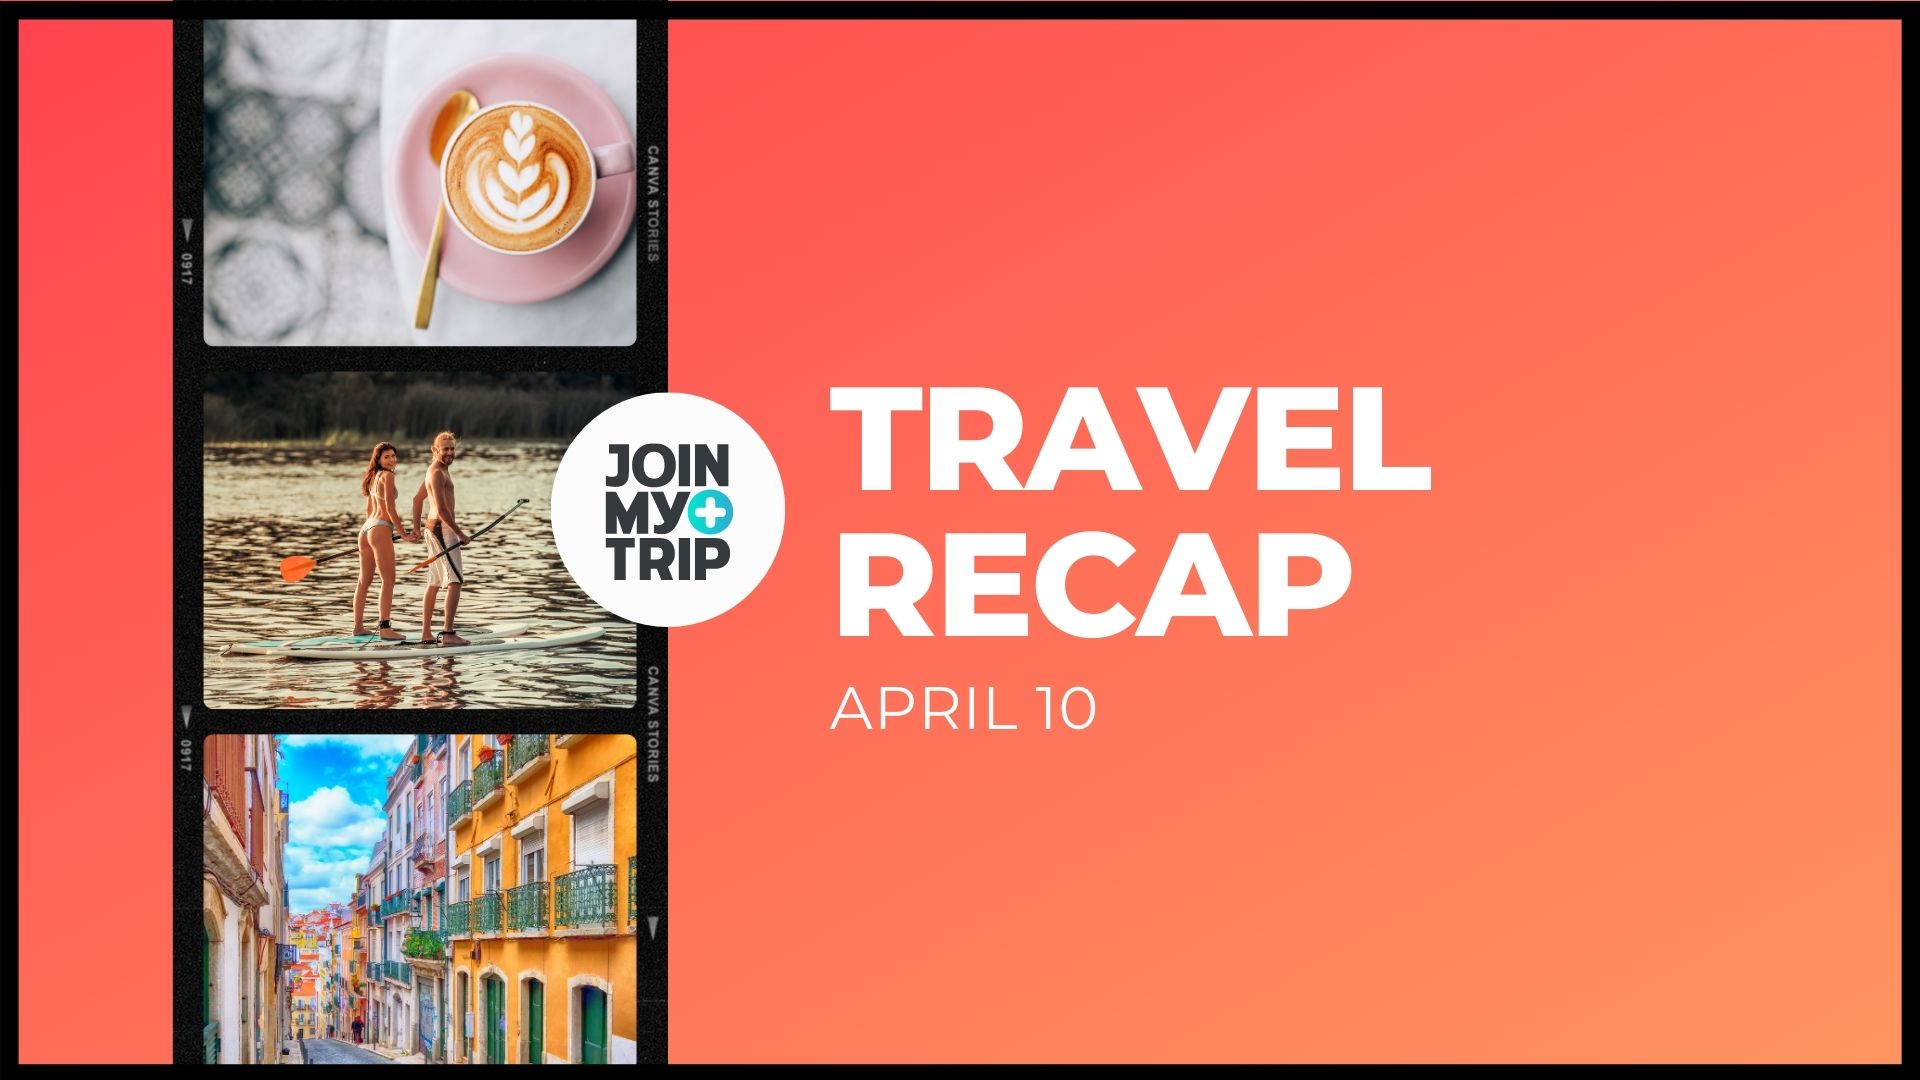 SUP Destinations, Coffee Cities, Portugal Travel | Travel Recap